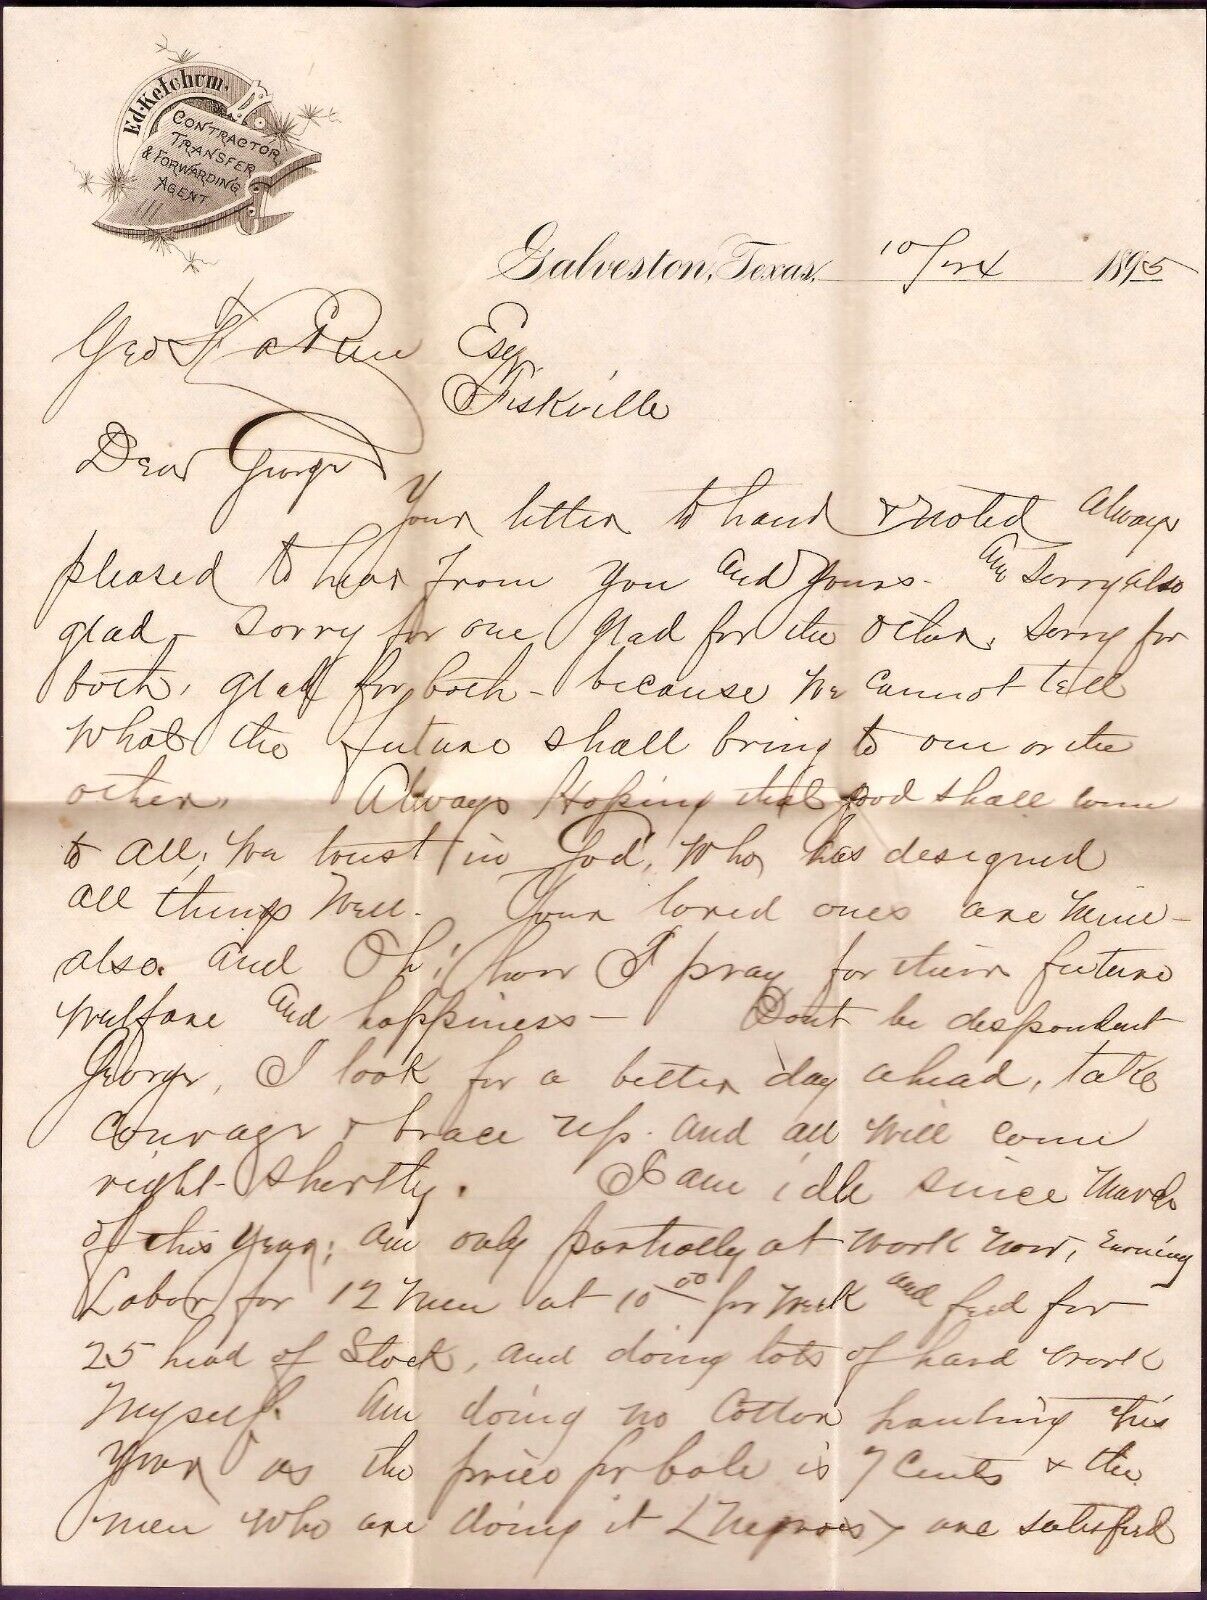 1895 Galveston Texas Contractor Letter Interesting Content Cotton Hauling